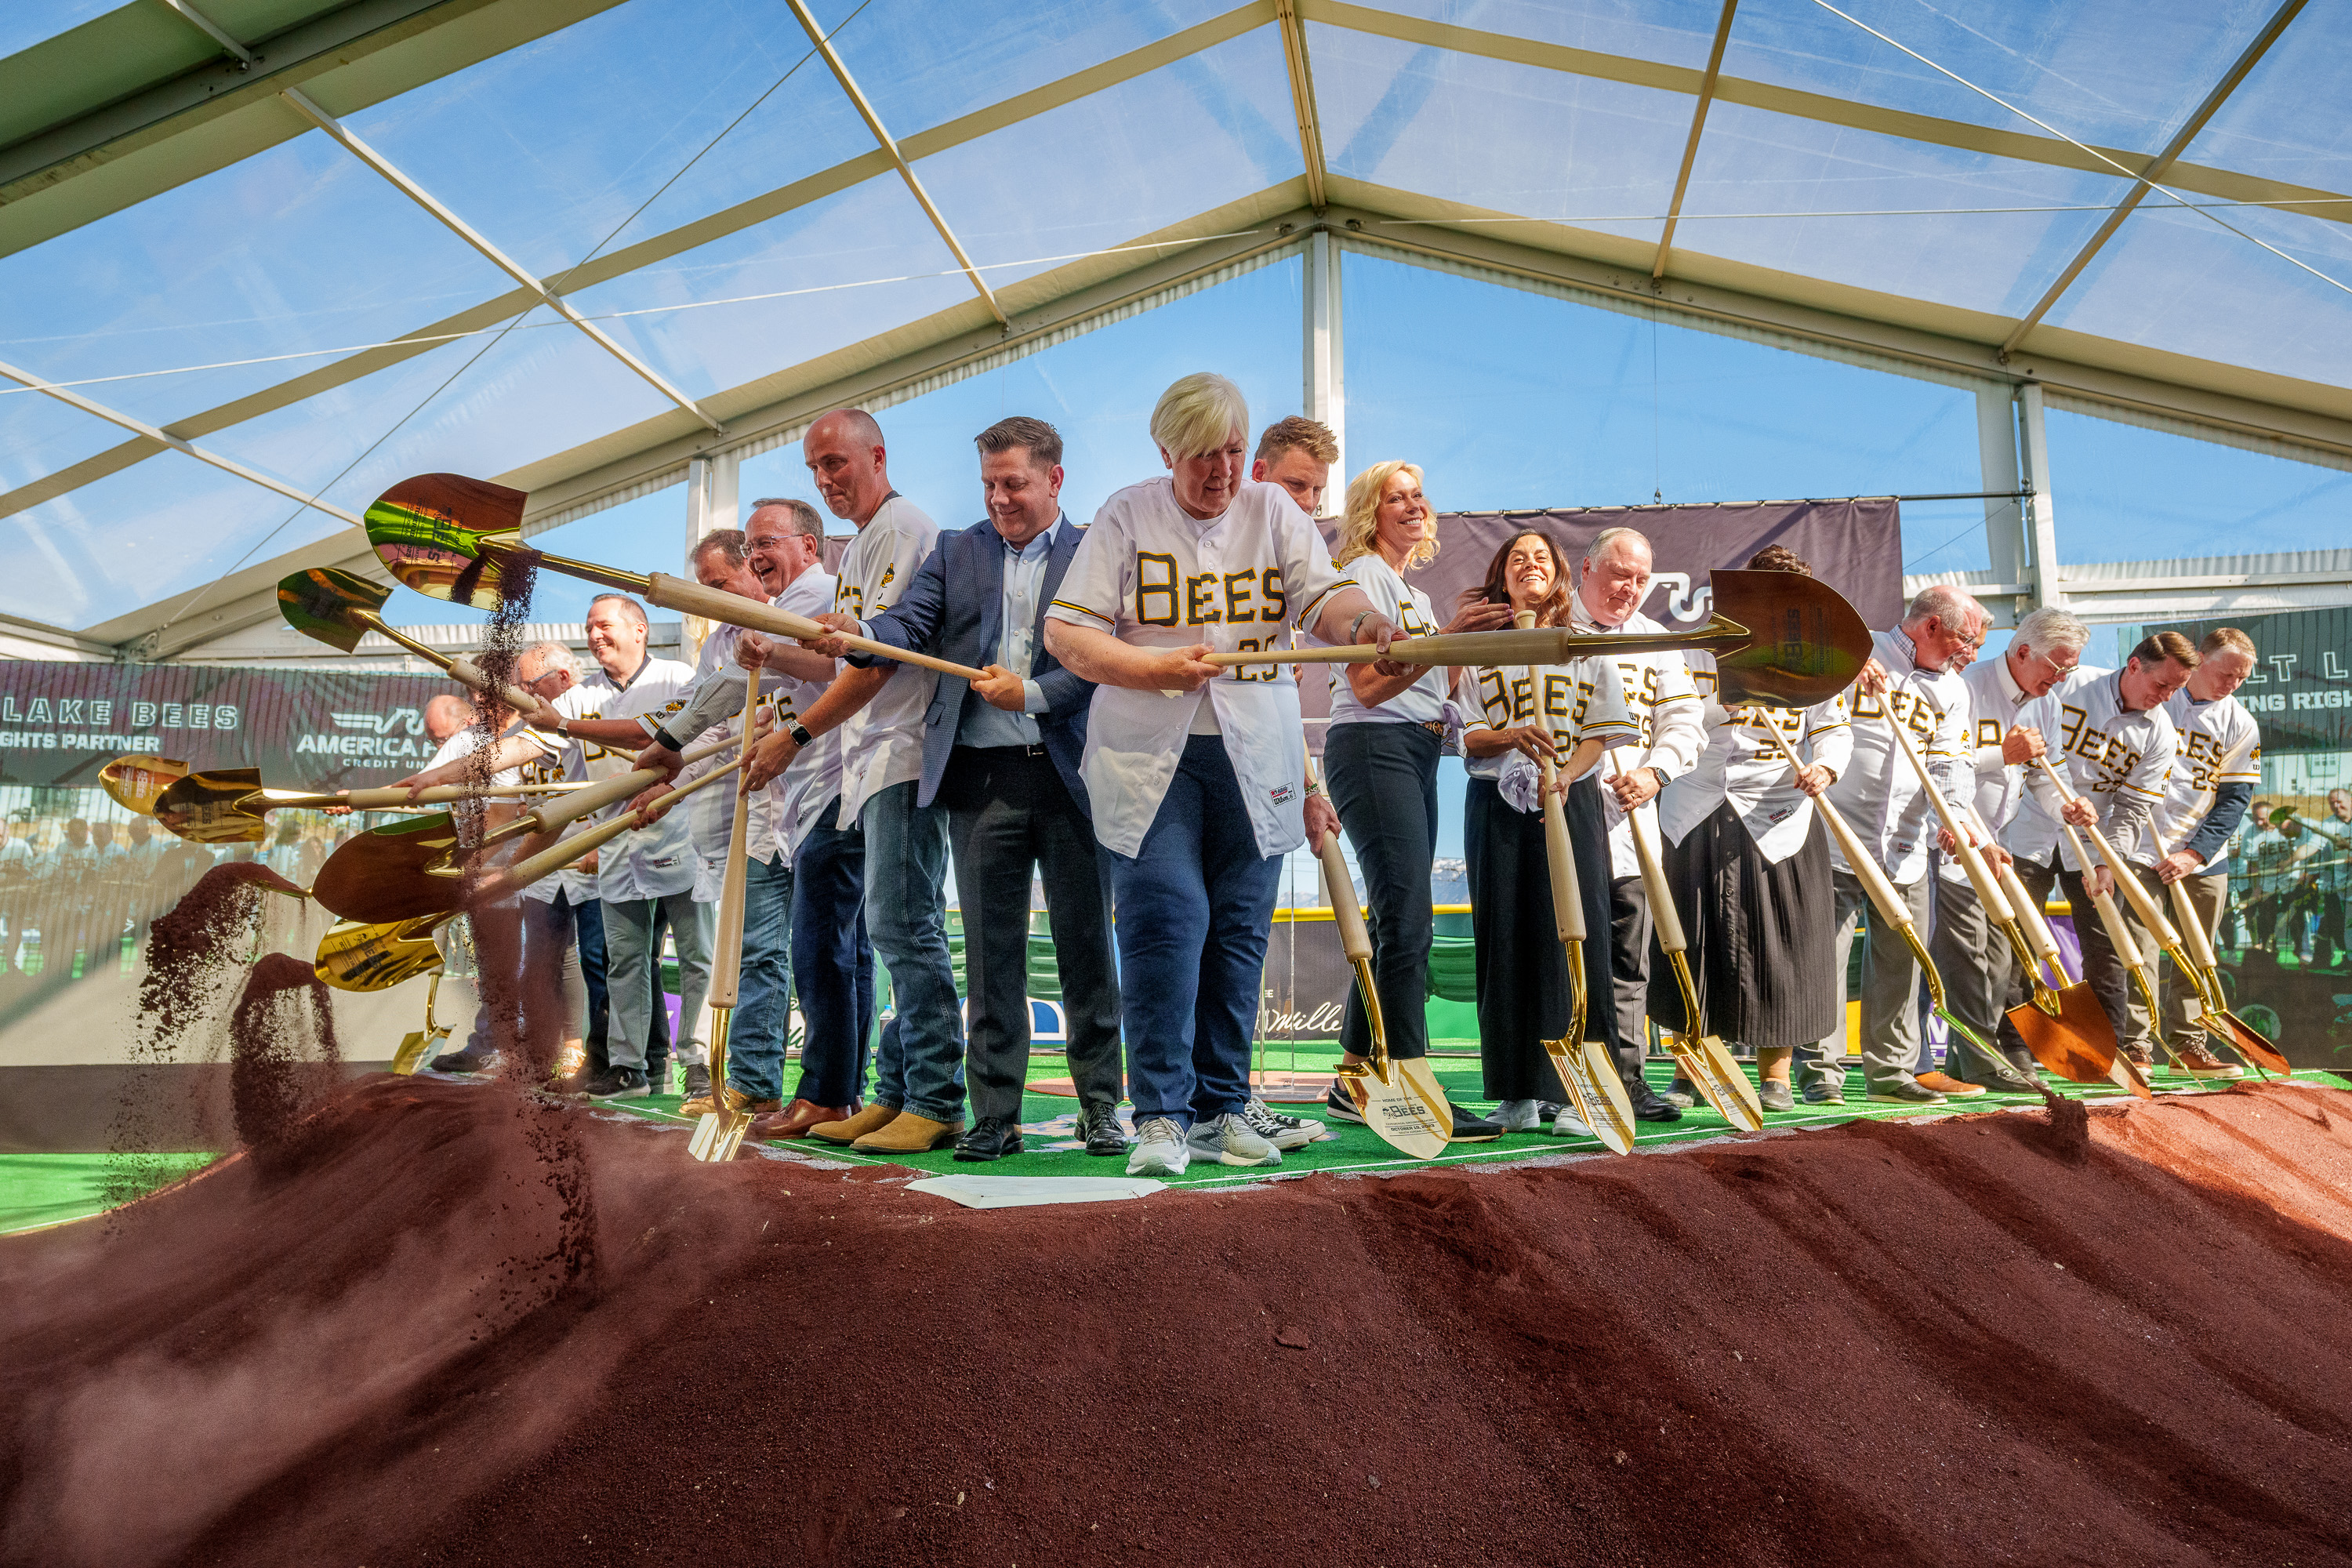 Smith's Ballpark Unveiled as New Stadium Name for Bees